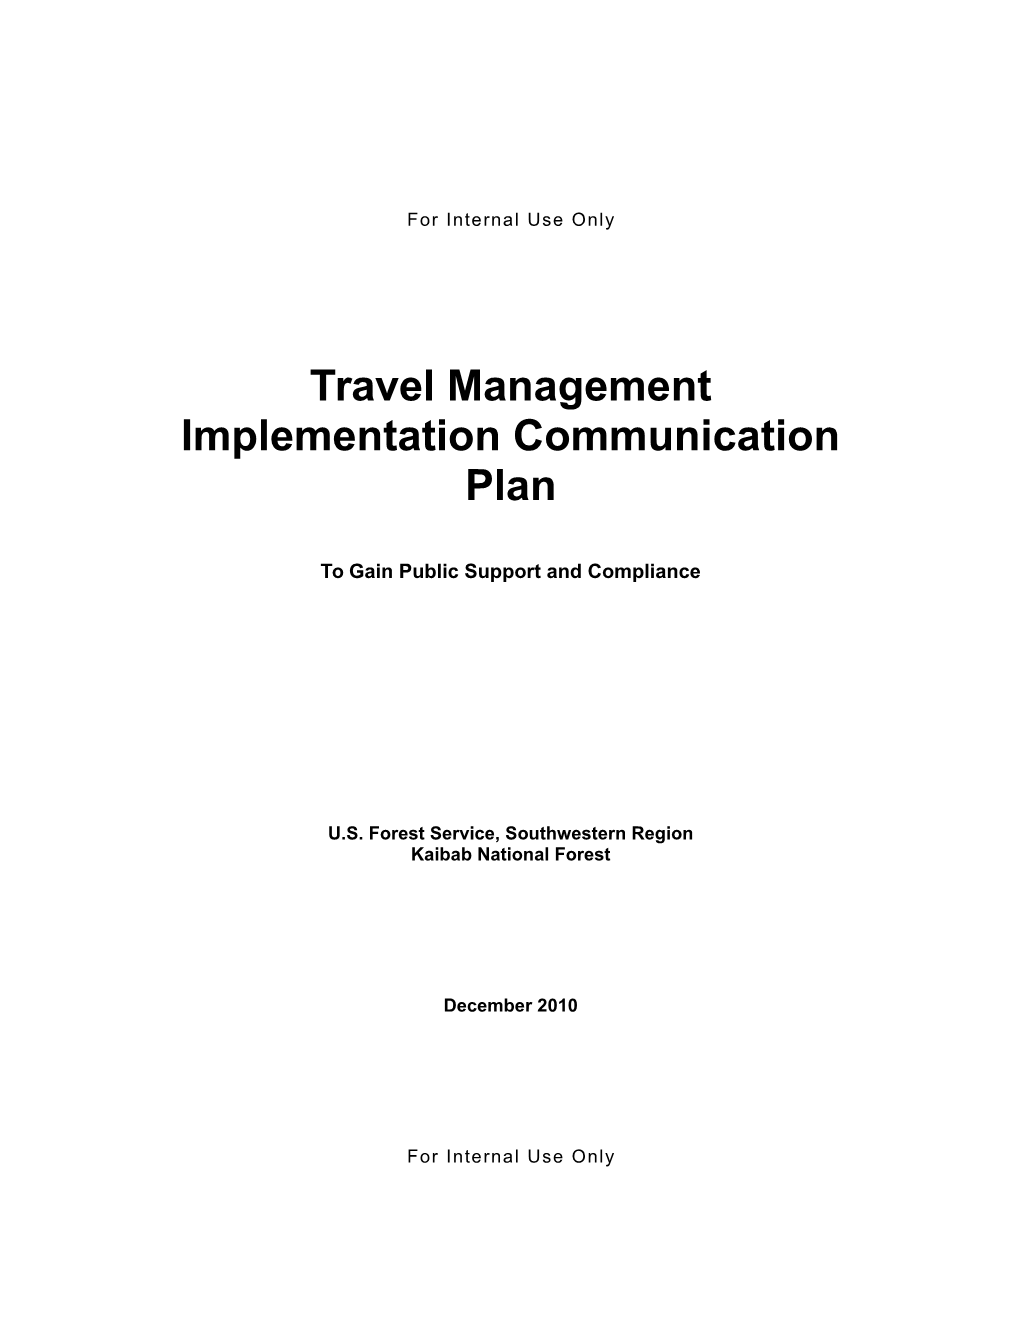 Travel Management Implementation Communication Plan